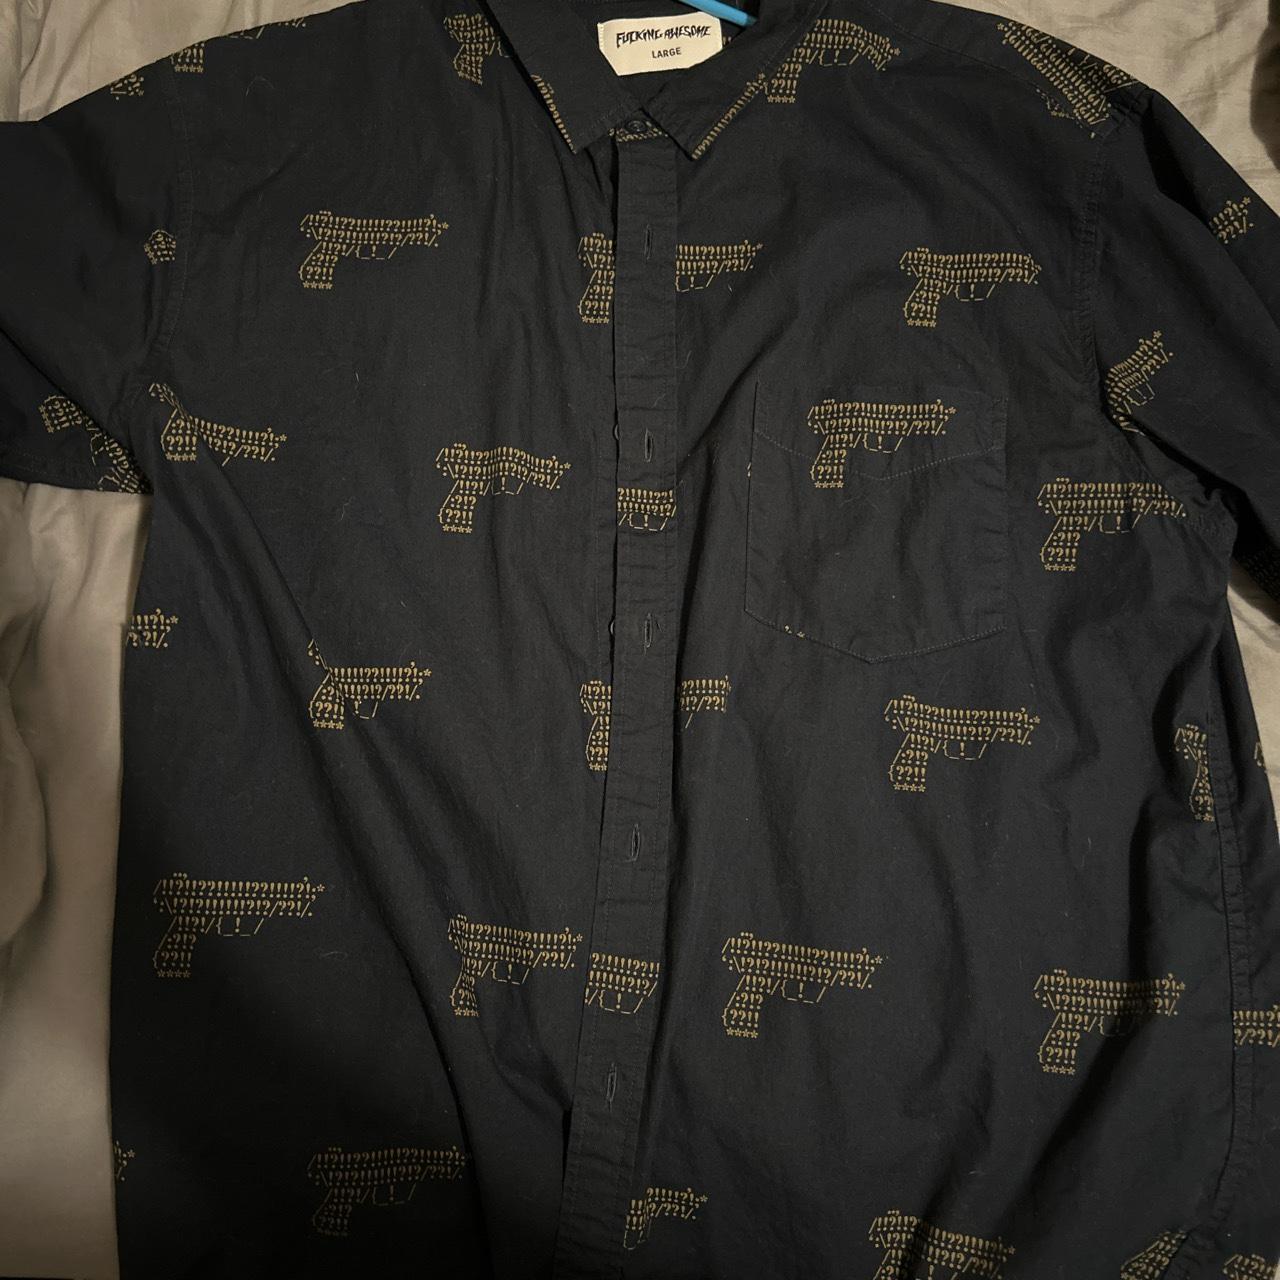 Fucking Awesome Gun Button up, Pretty Rare Shirt